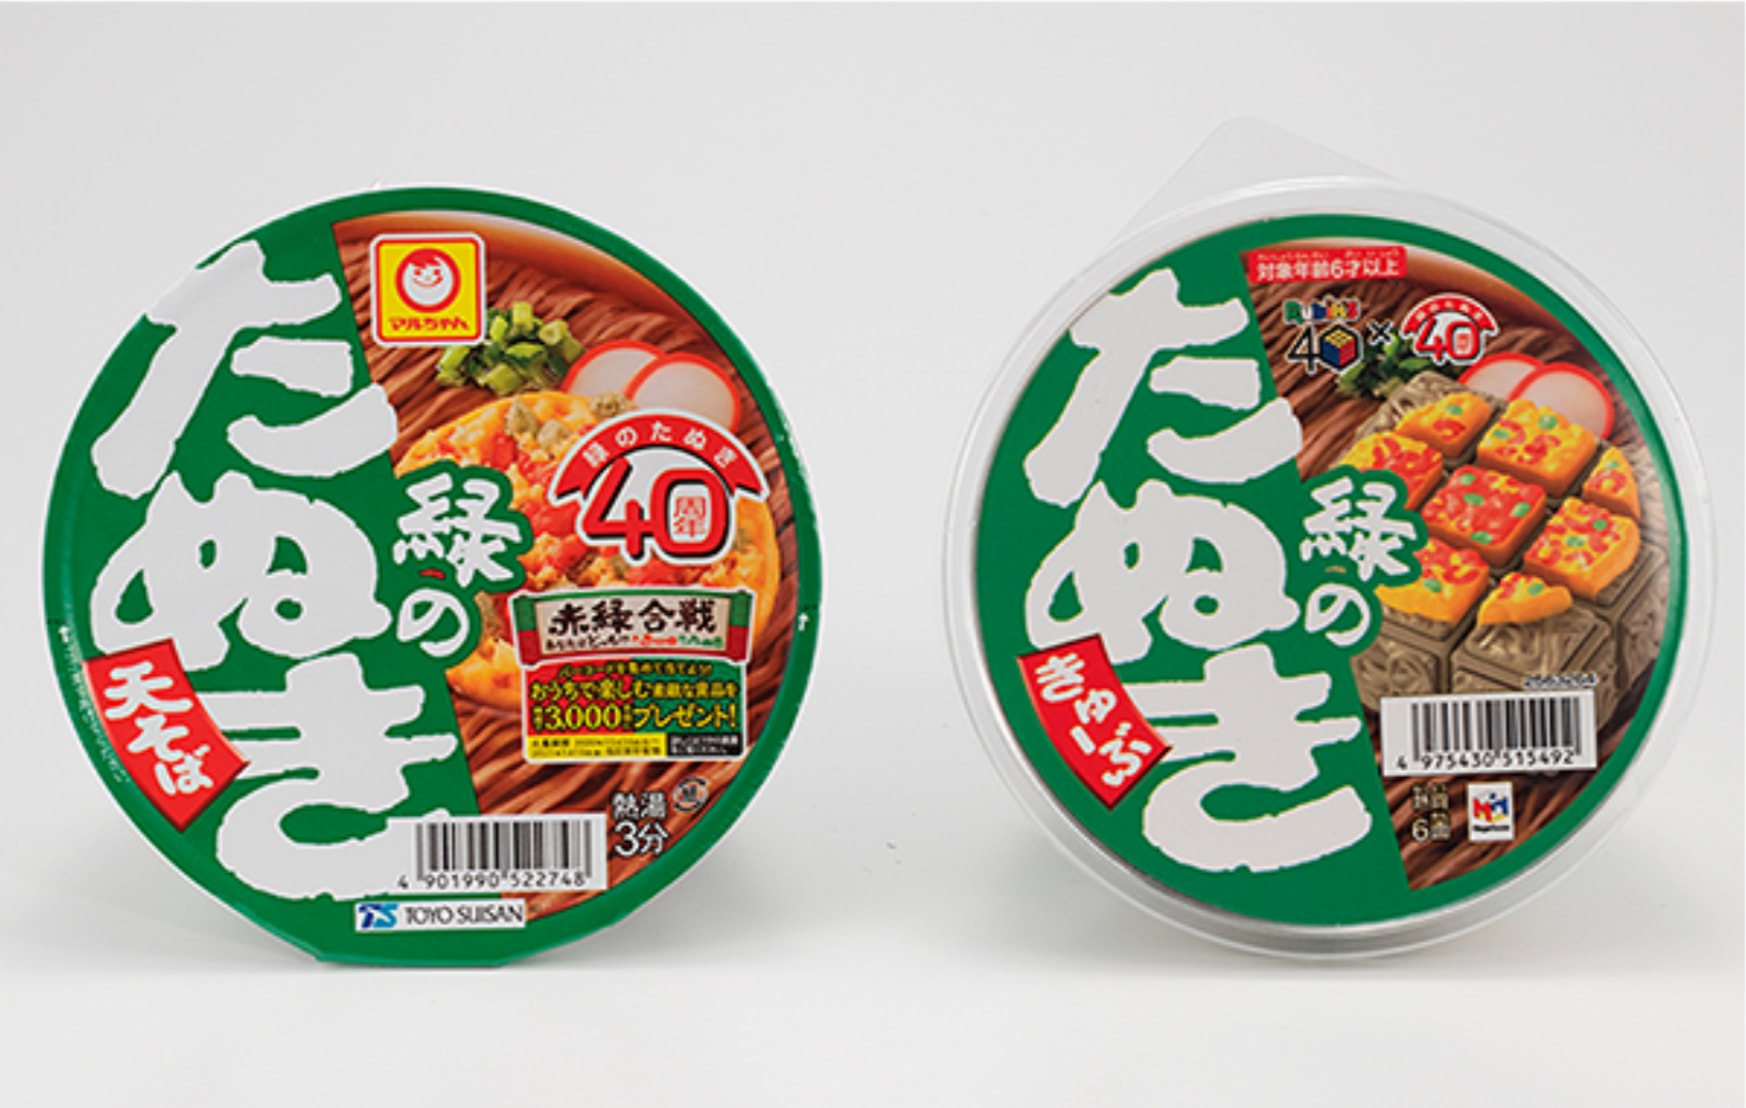 cup noodle rubik's cube - green tanuki rubik's cube packaging